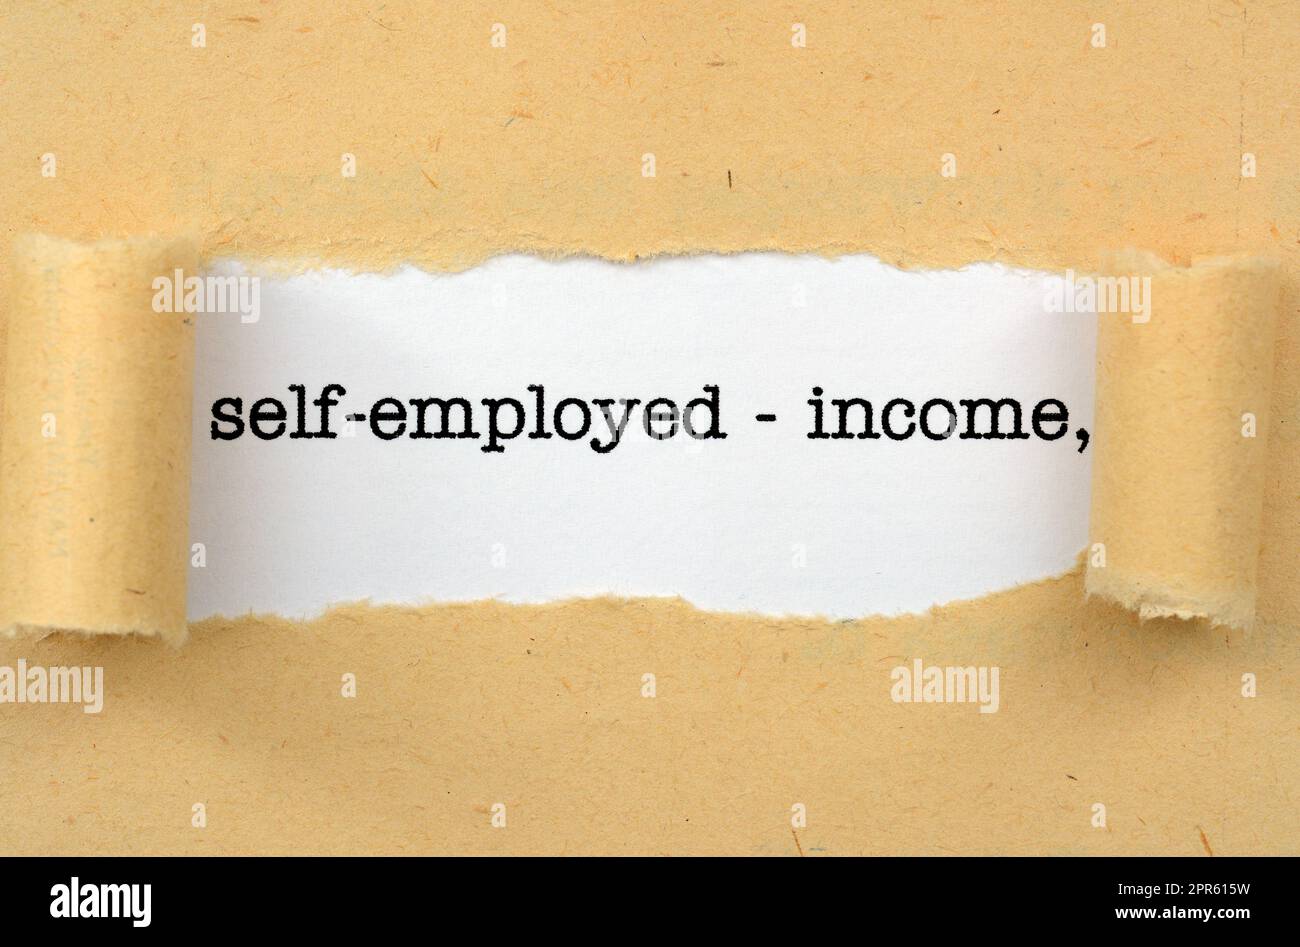 Self employed - income Stock Photo